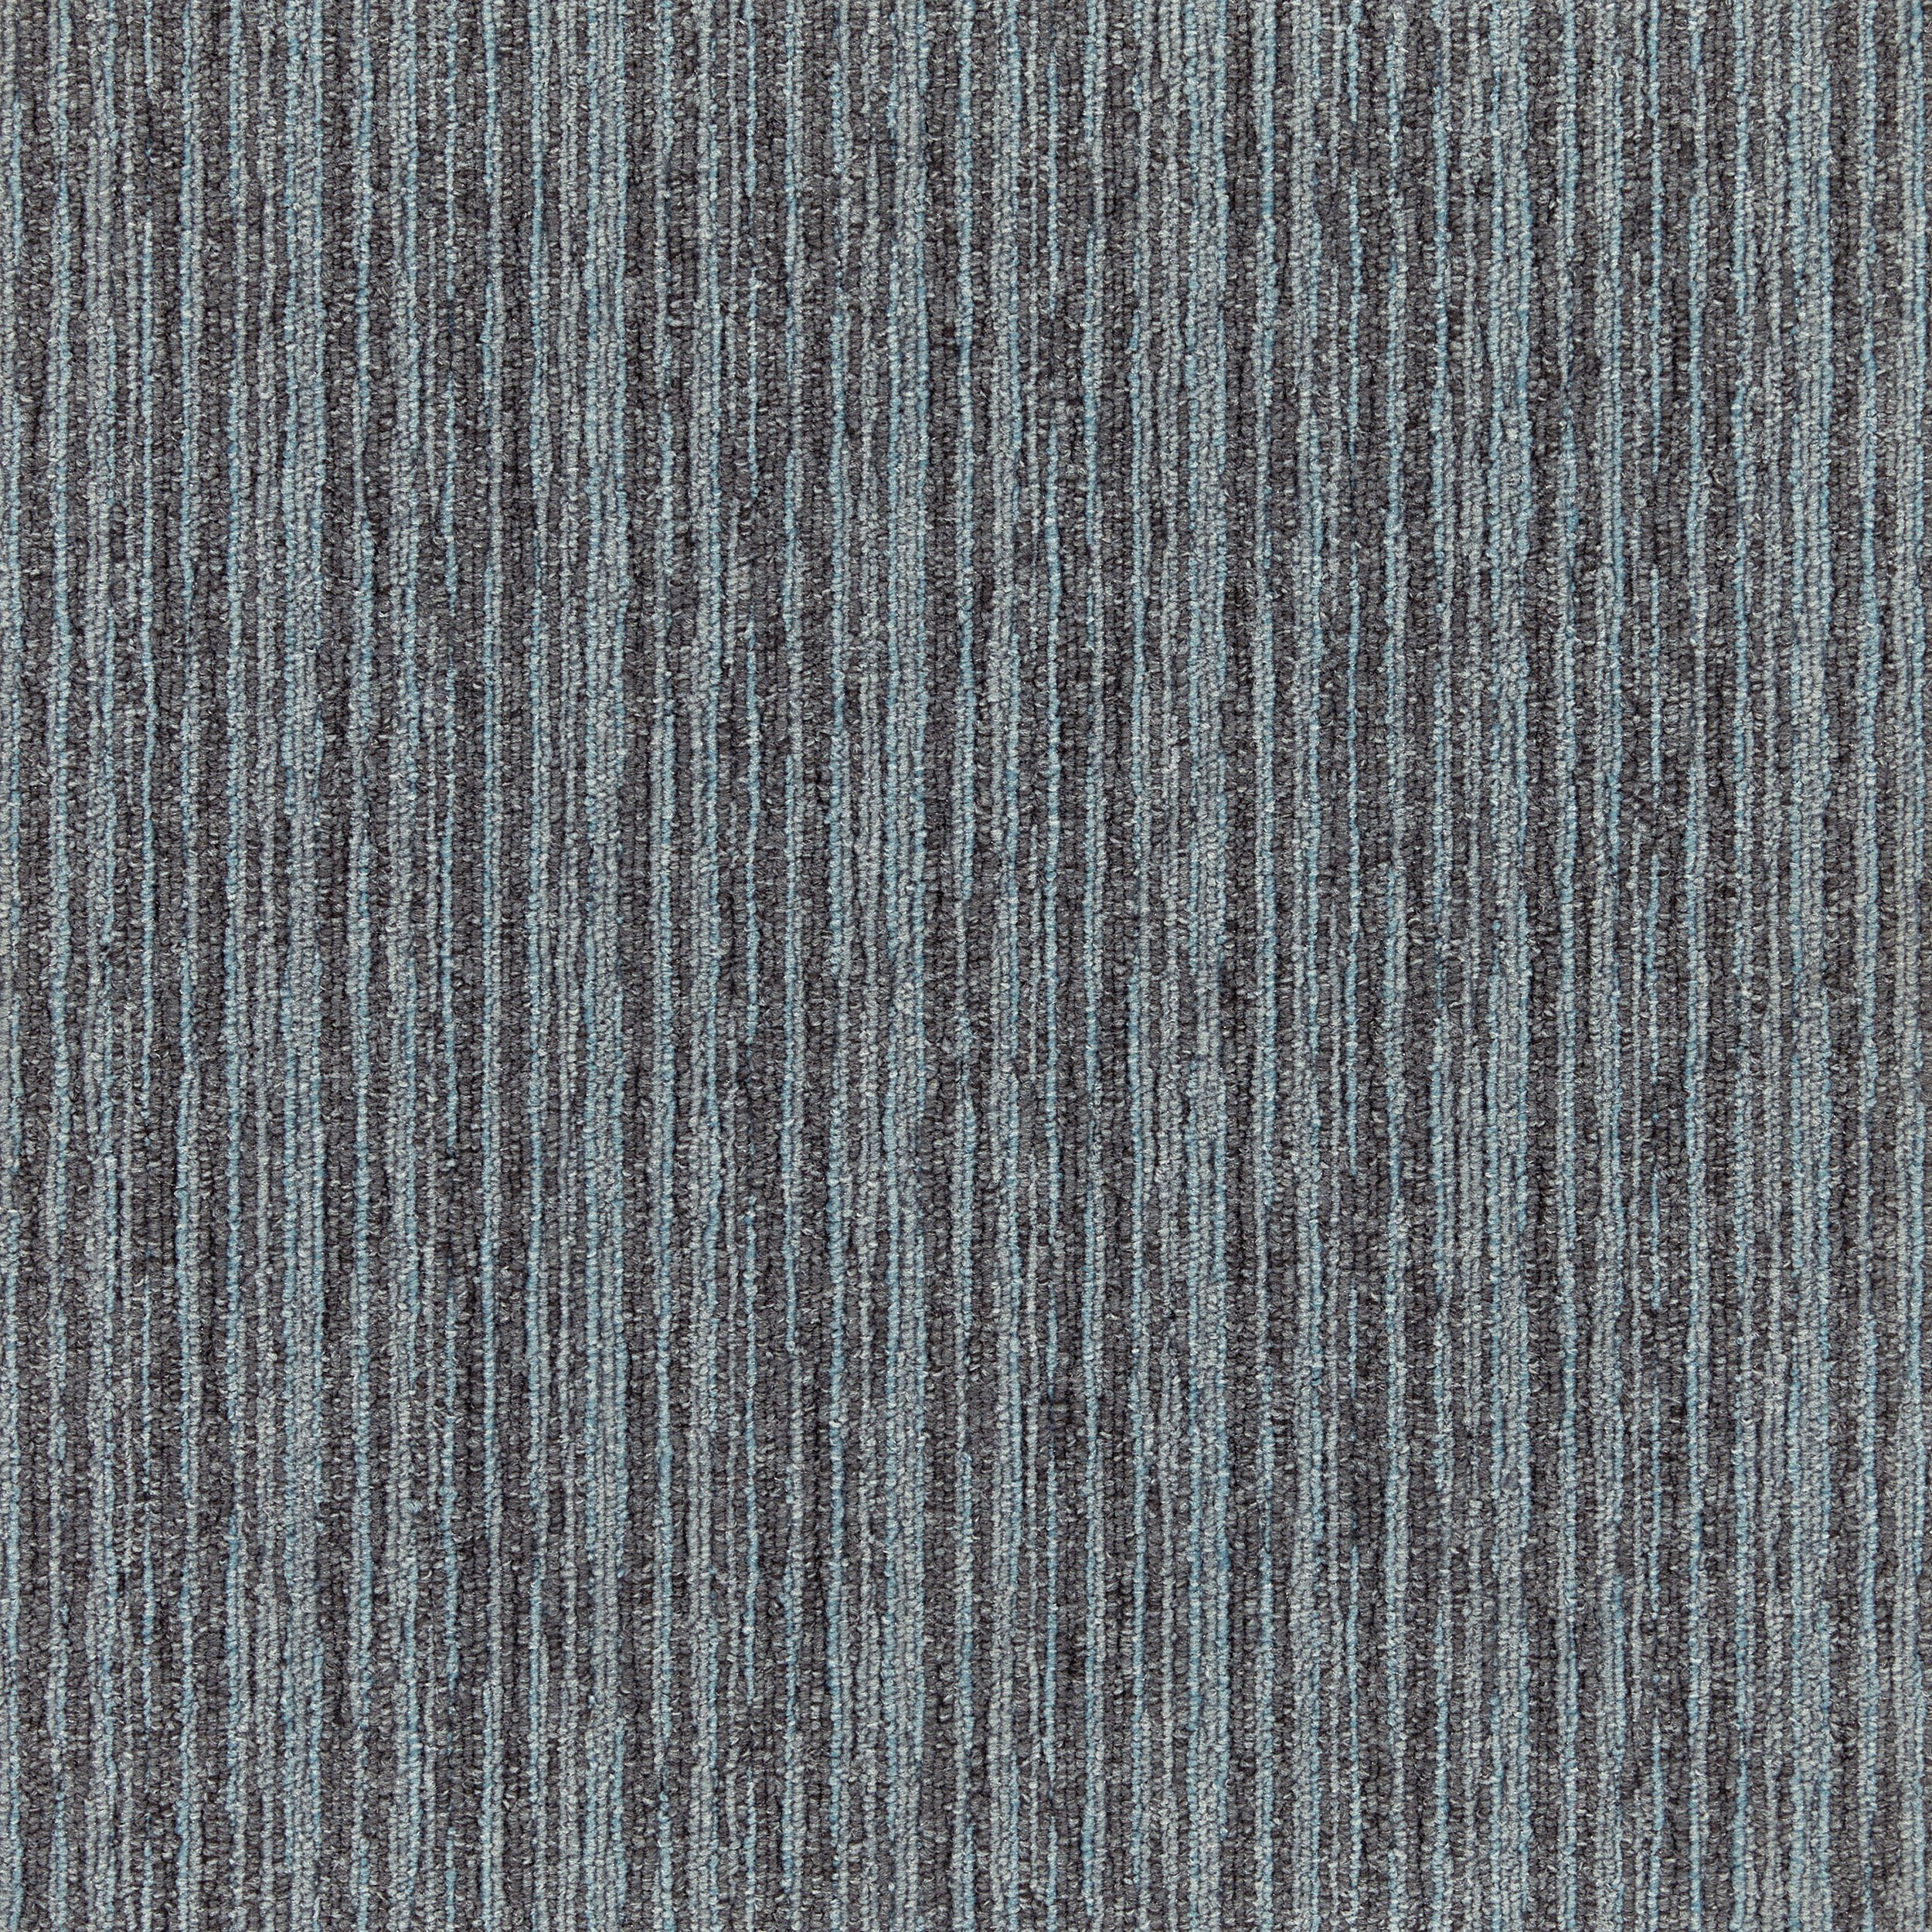 Yuton 105 Carpet Tile In Ice afbeeldingnummer 2